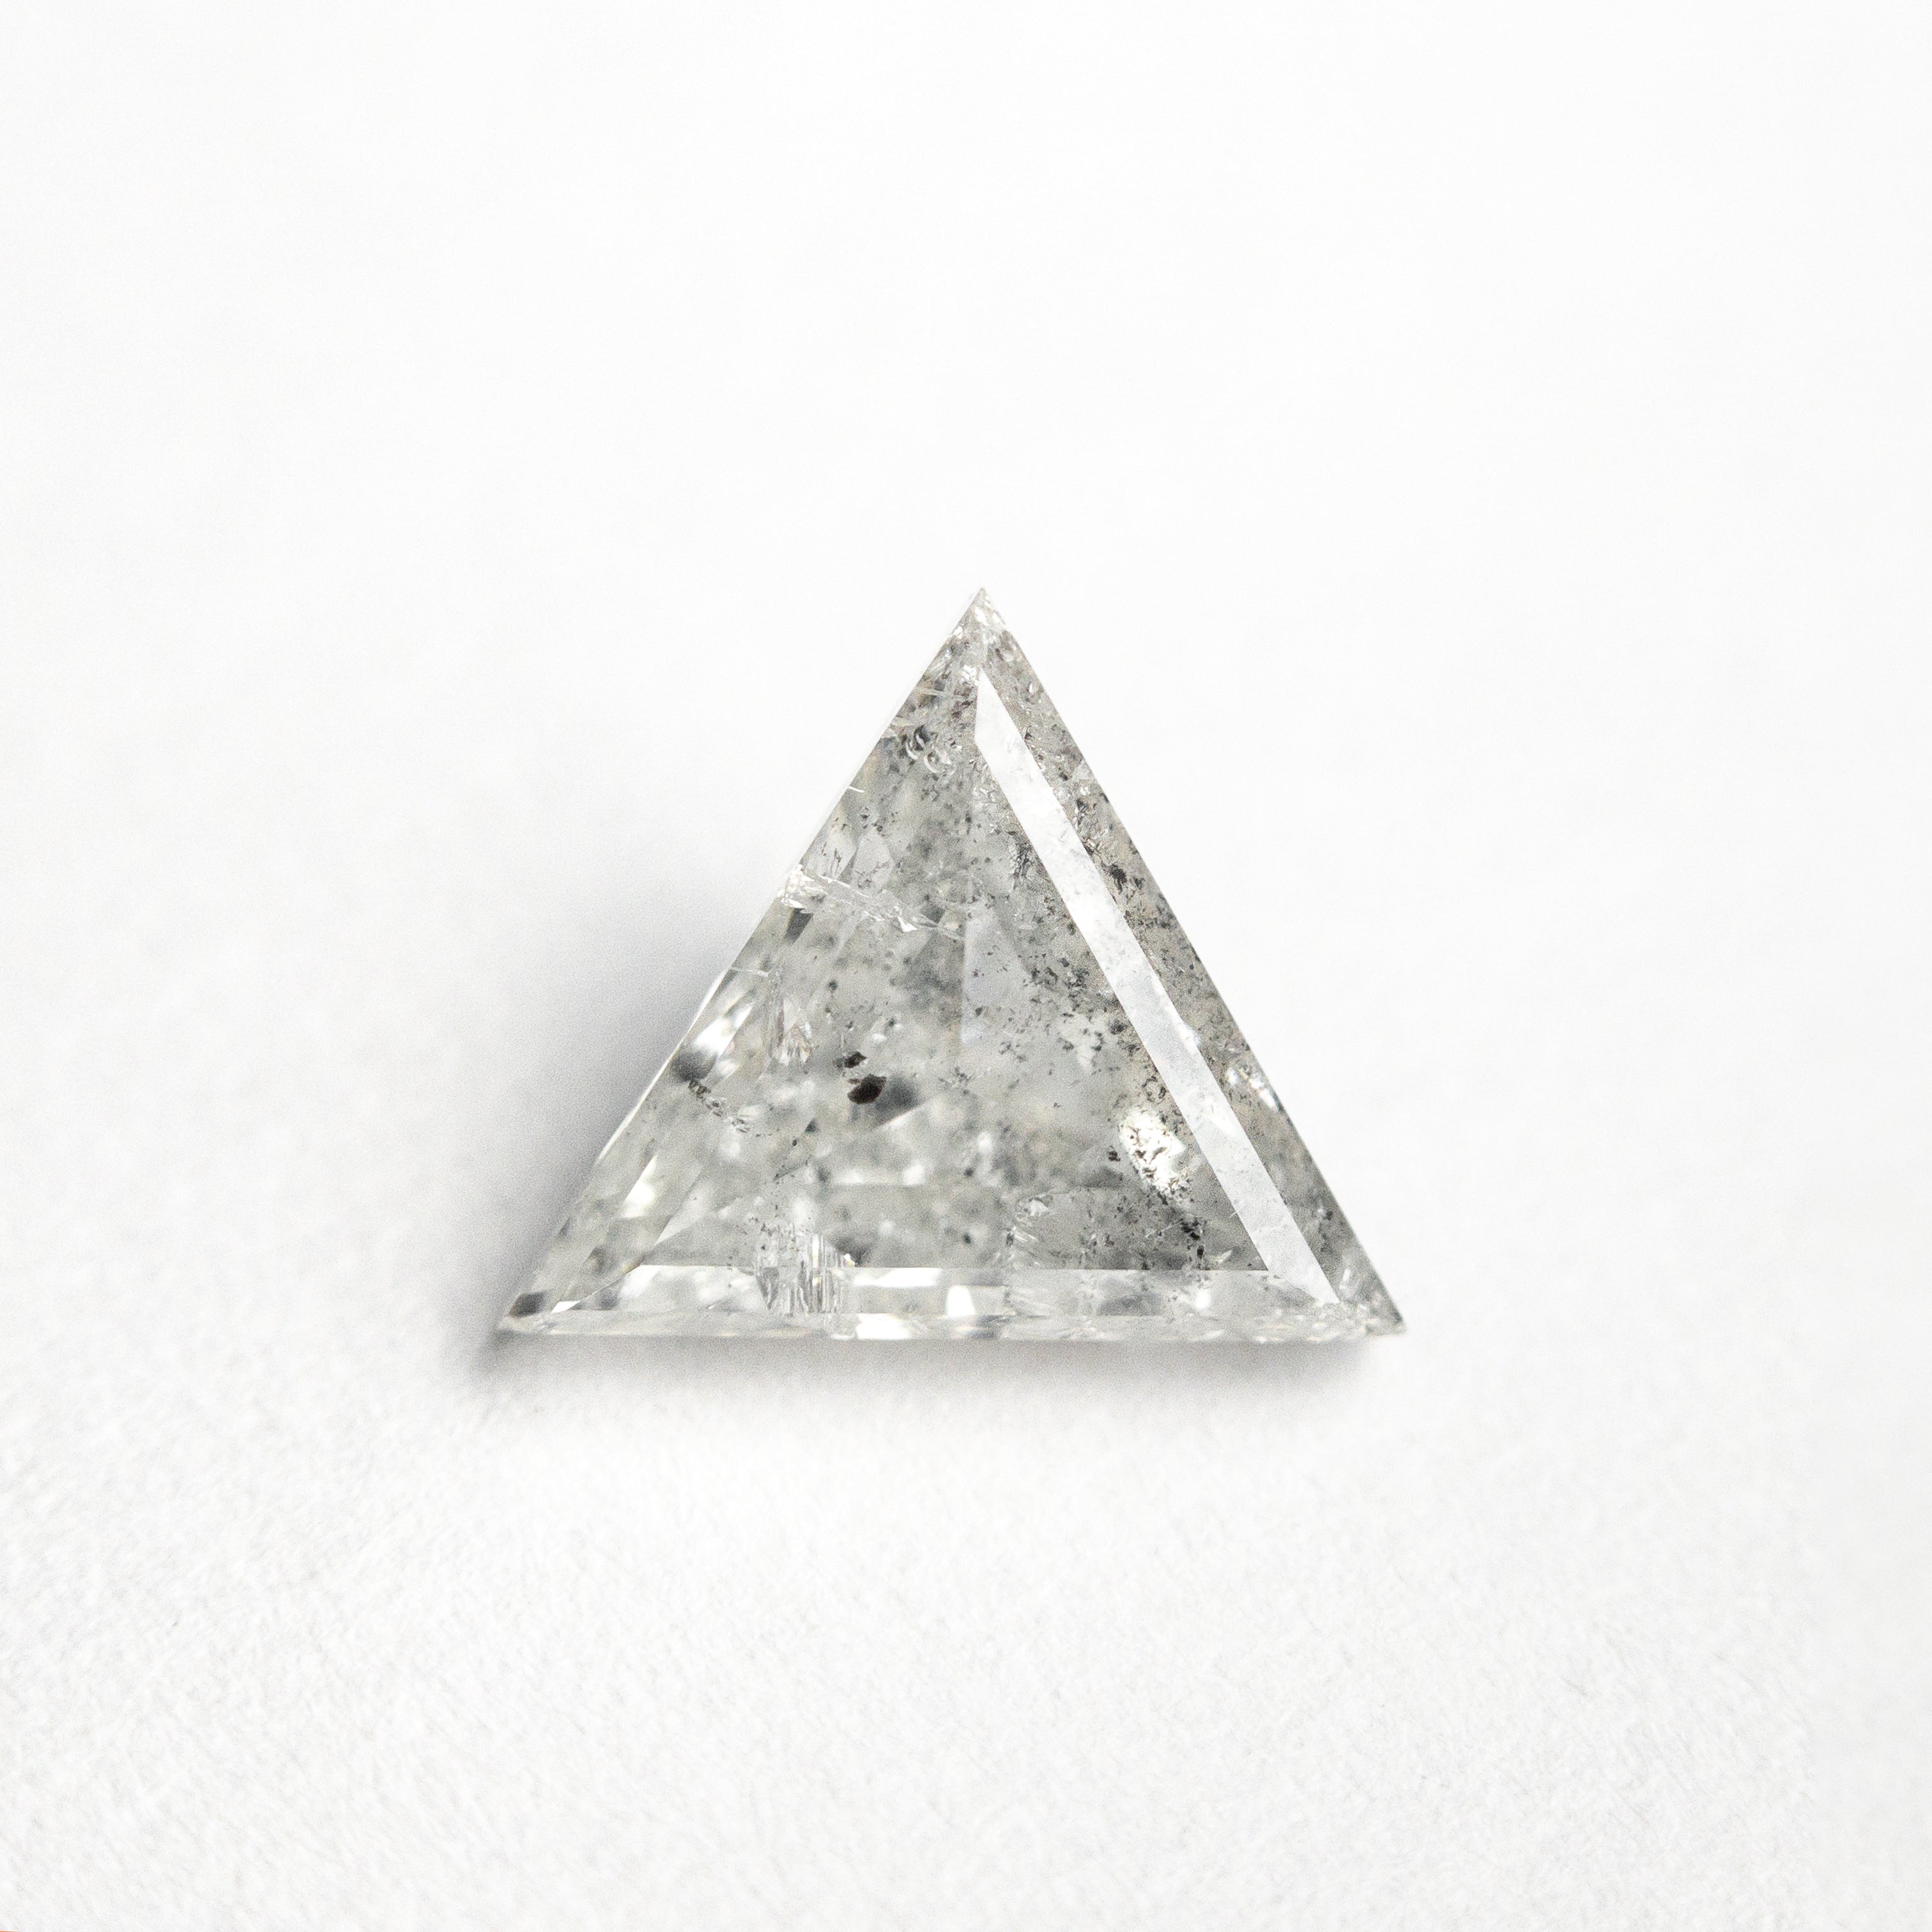 Salt and Pepper Step Cut Diamond - 1.09ct Triangle